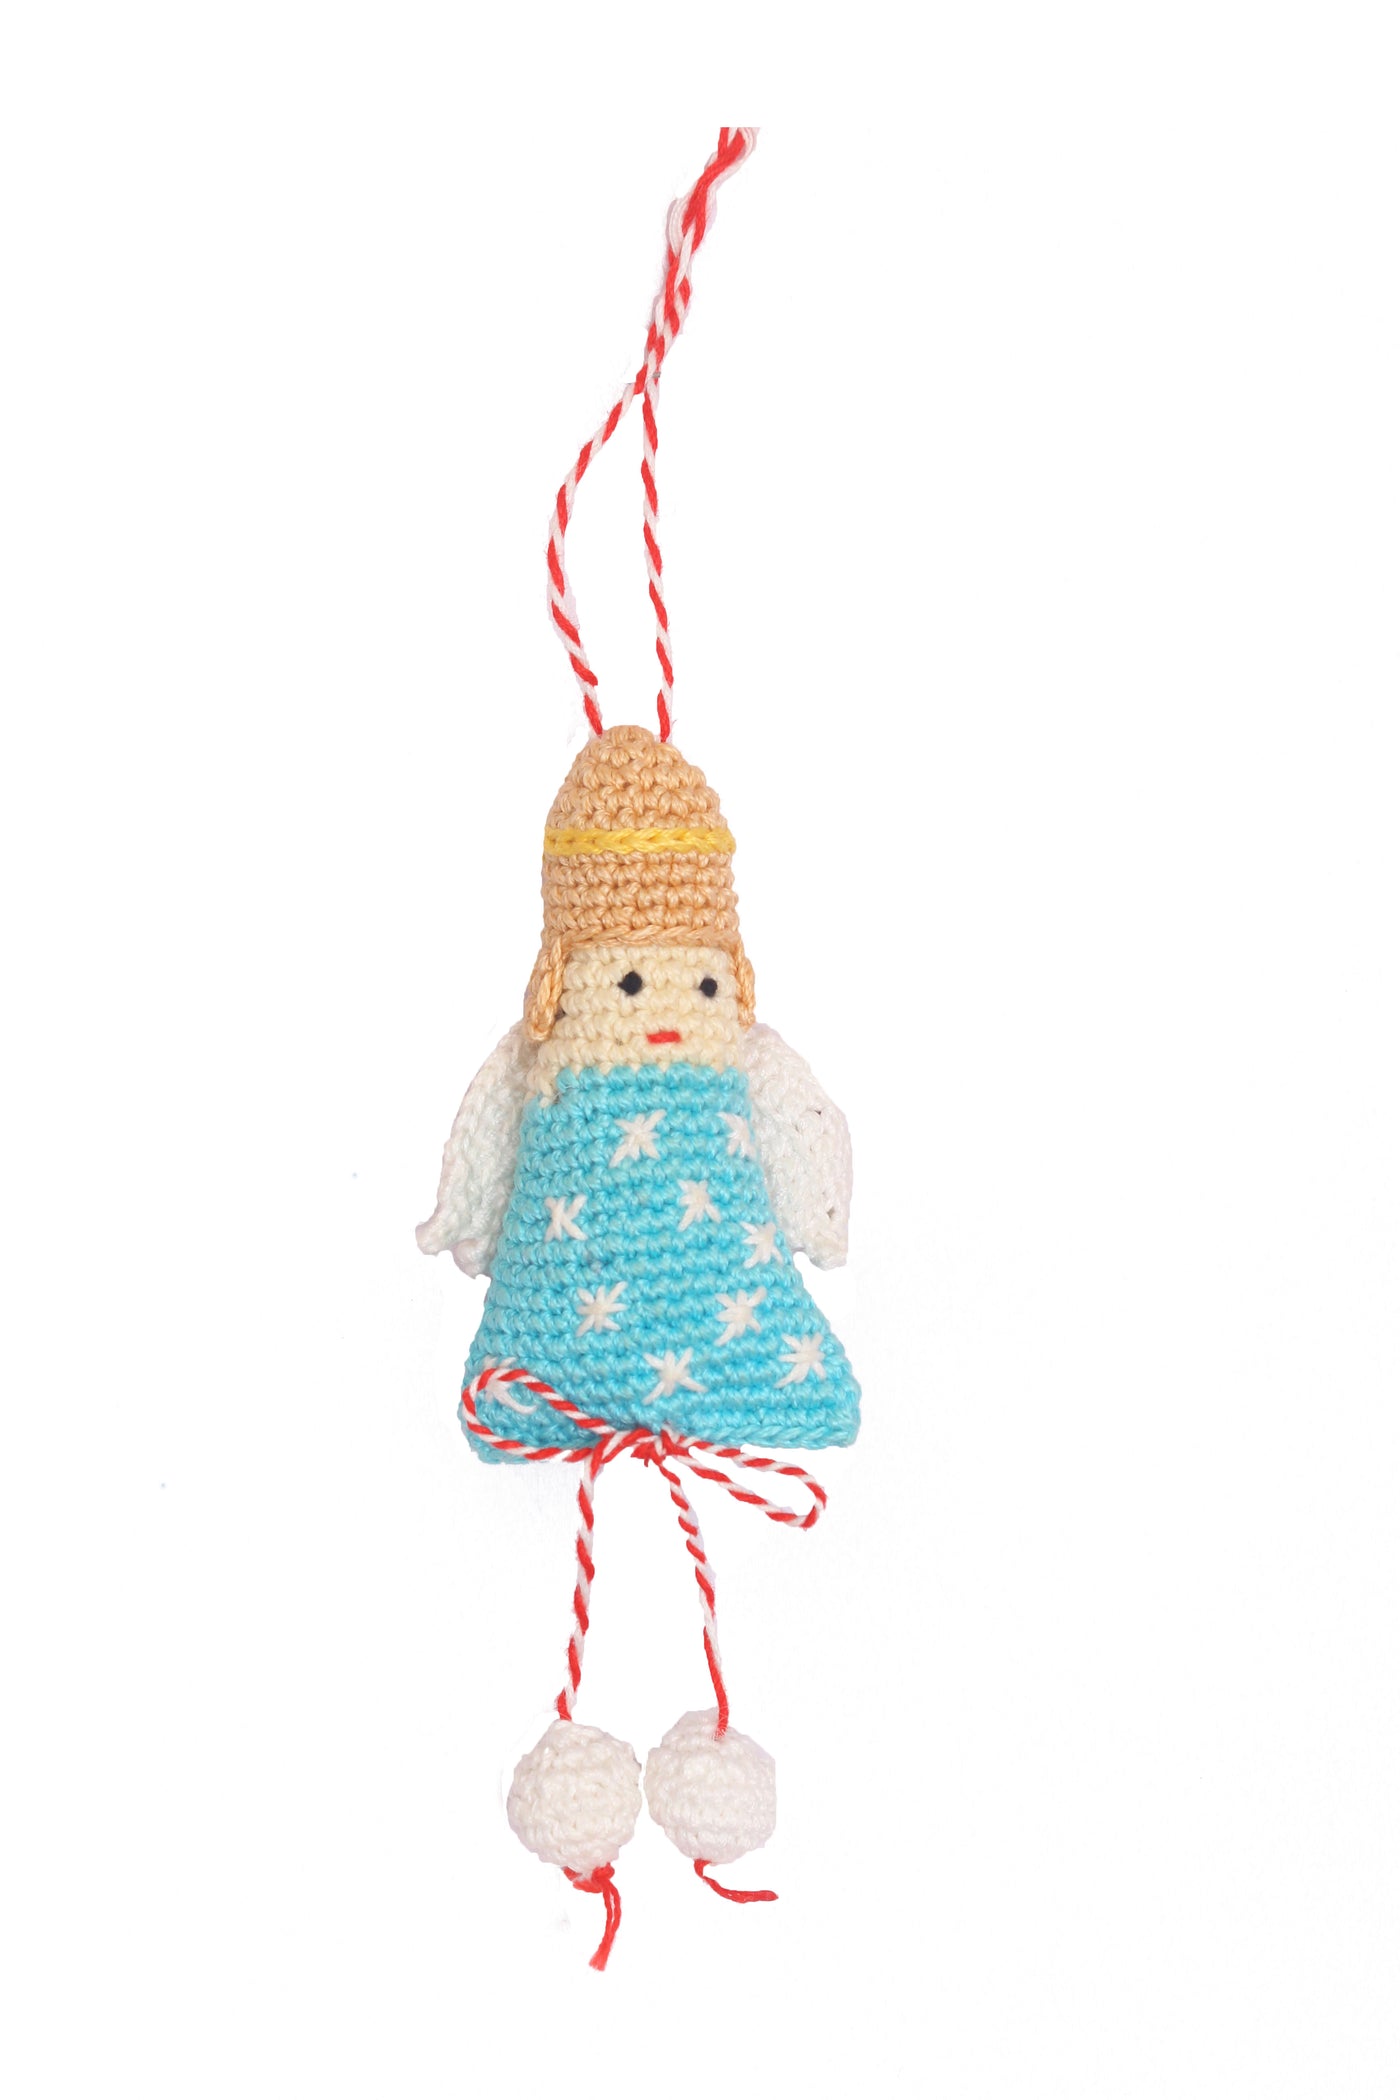 Handcrafted Amigurumi Christmas Tree Ornament-
angle doll